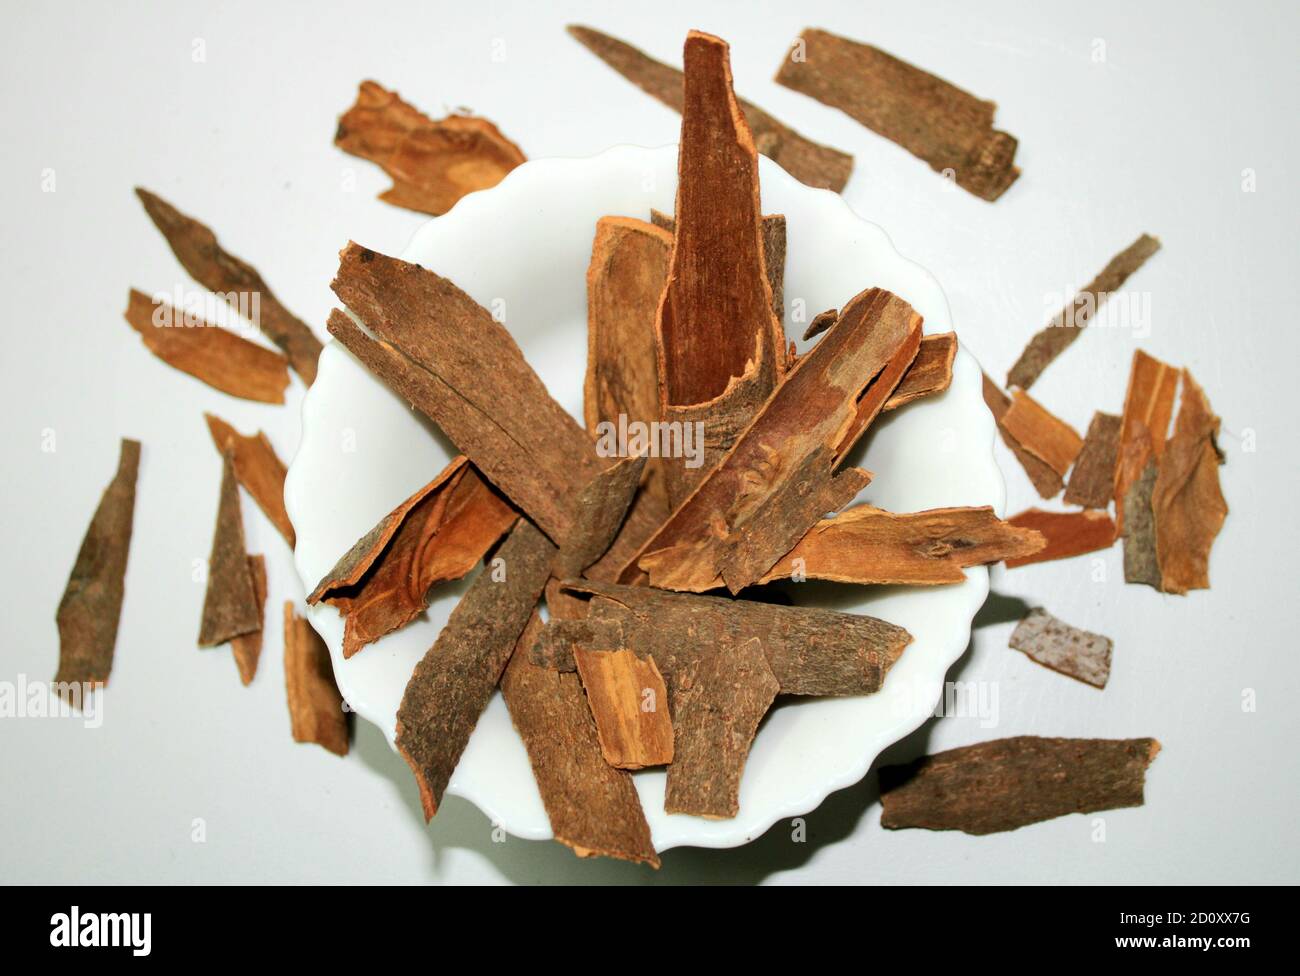 healthy Cinnamon sticks stock images Stock Photo